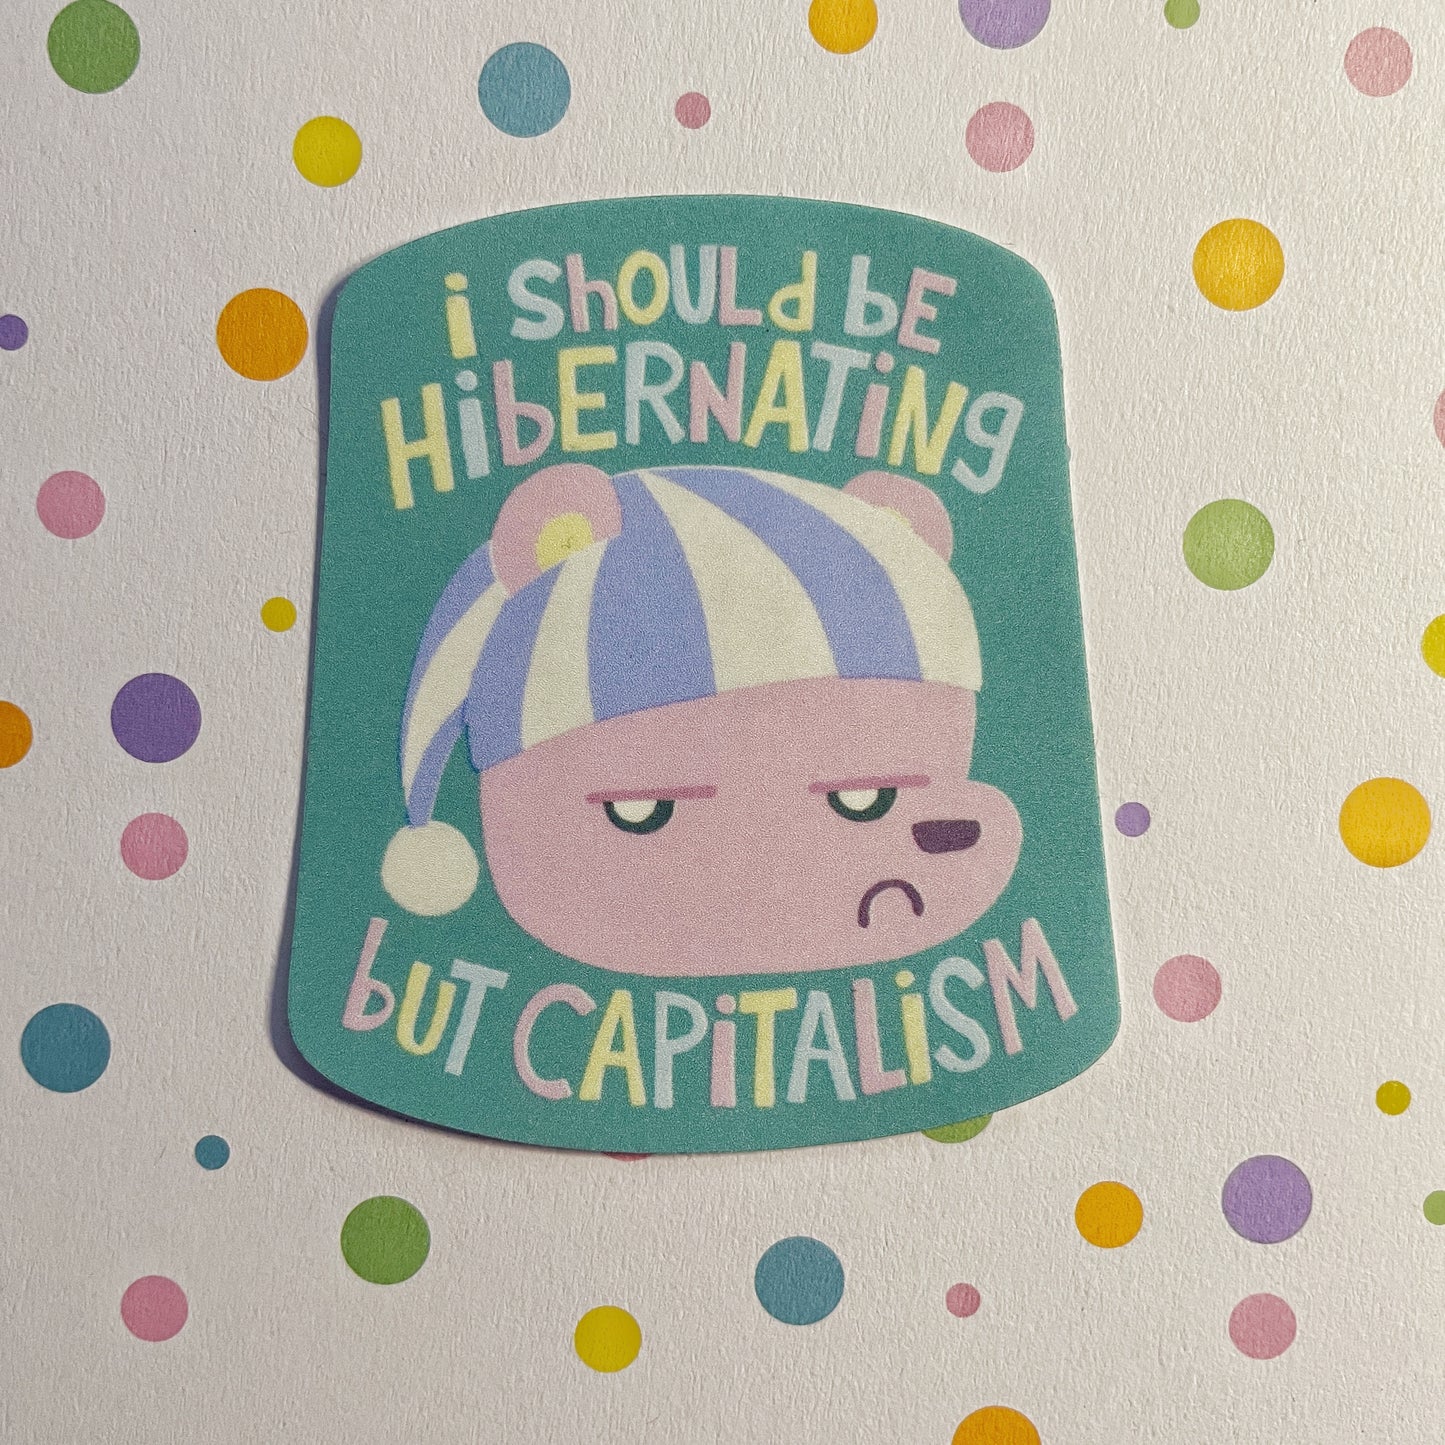 I Should Be Hibernating But Capitalism sticker